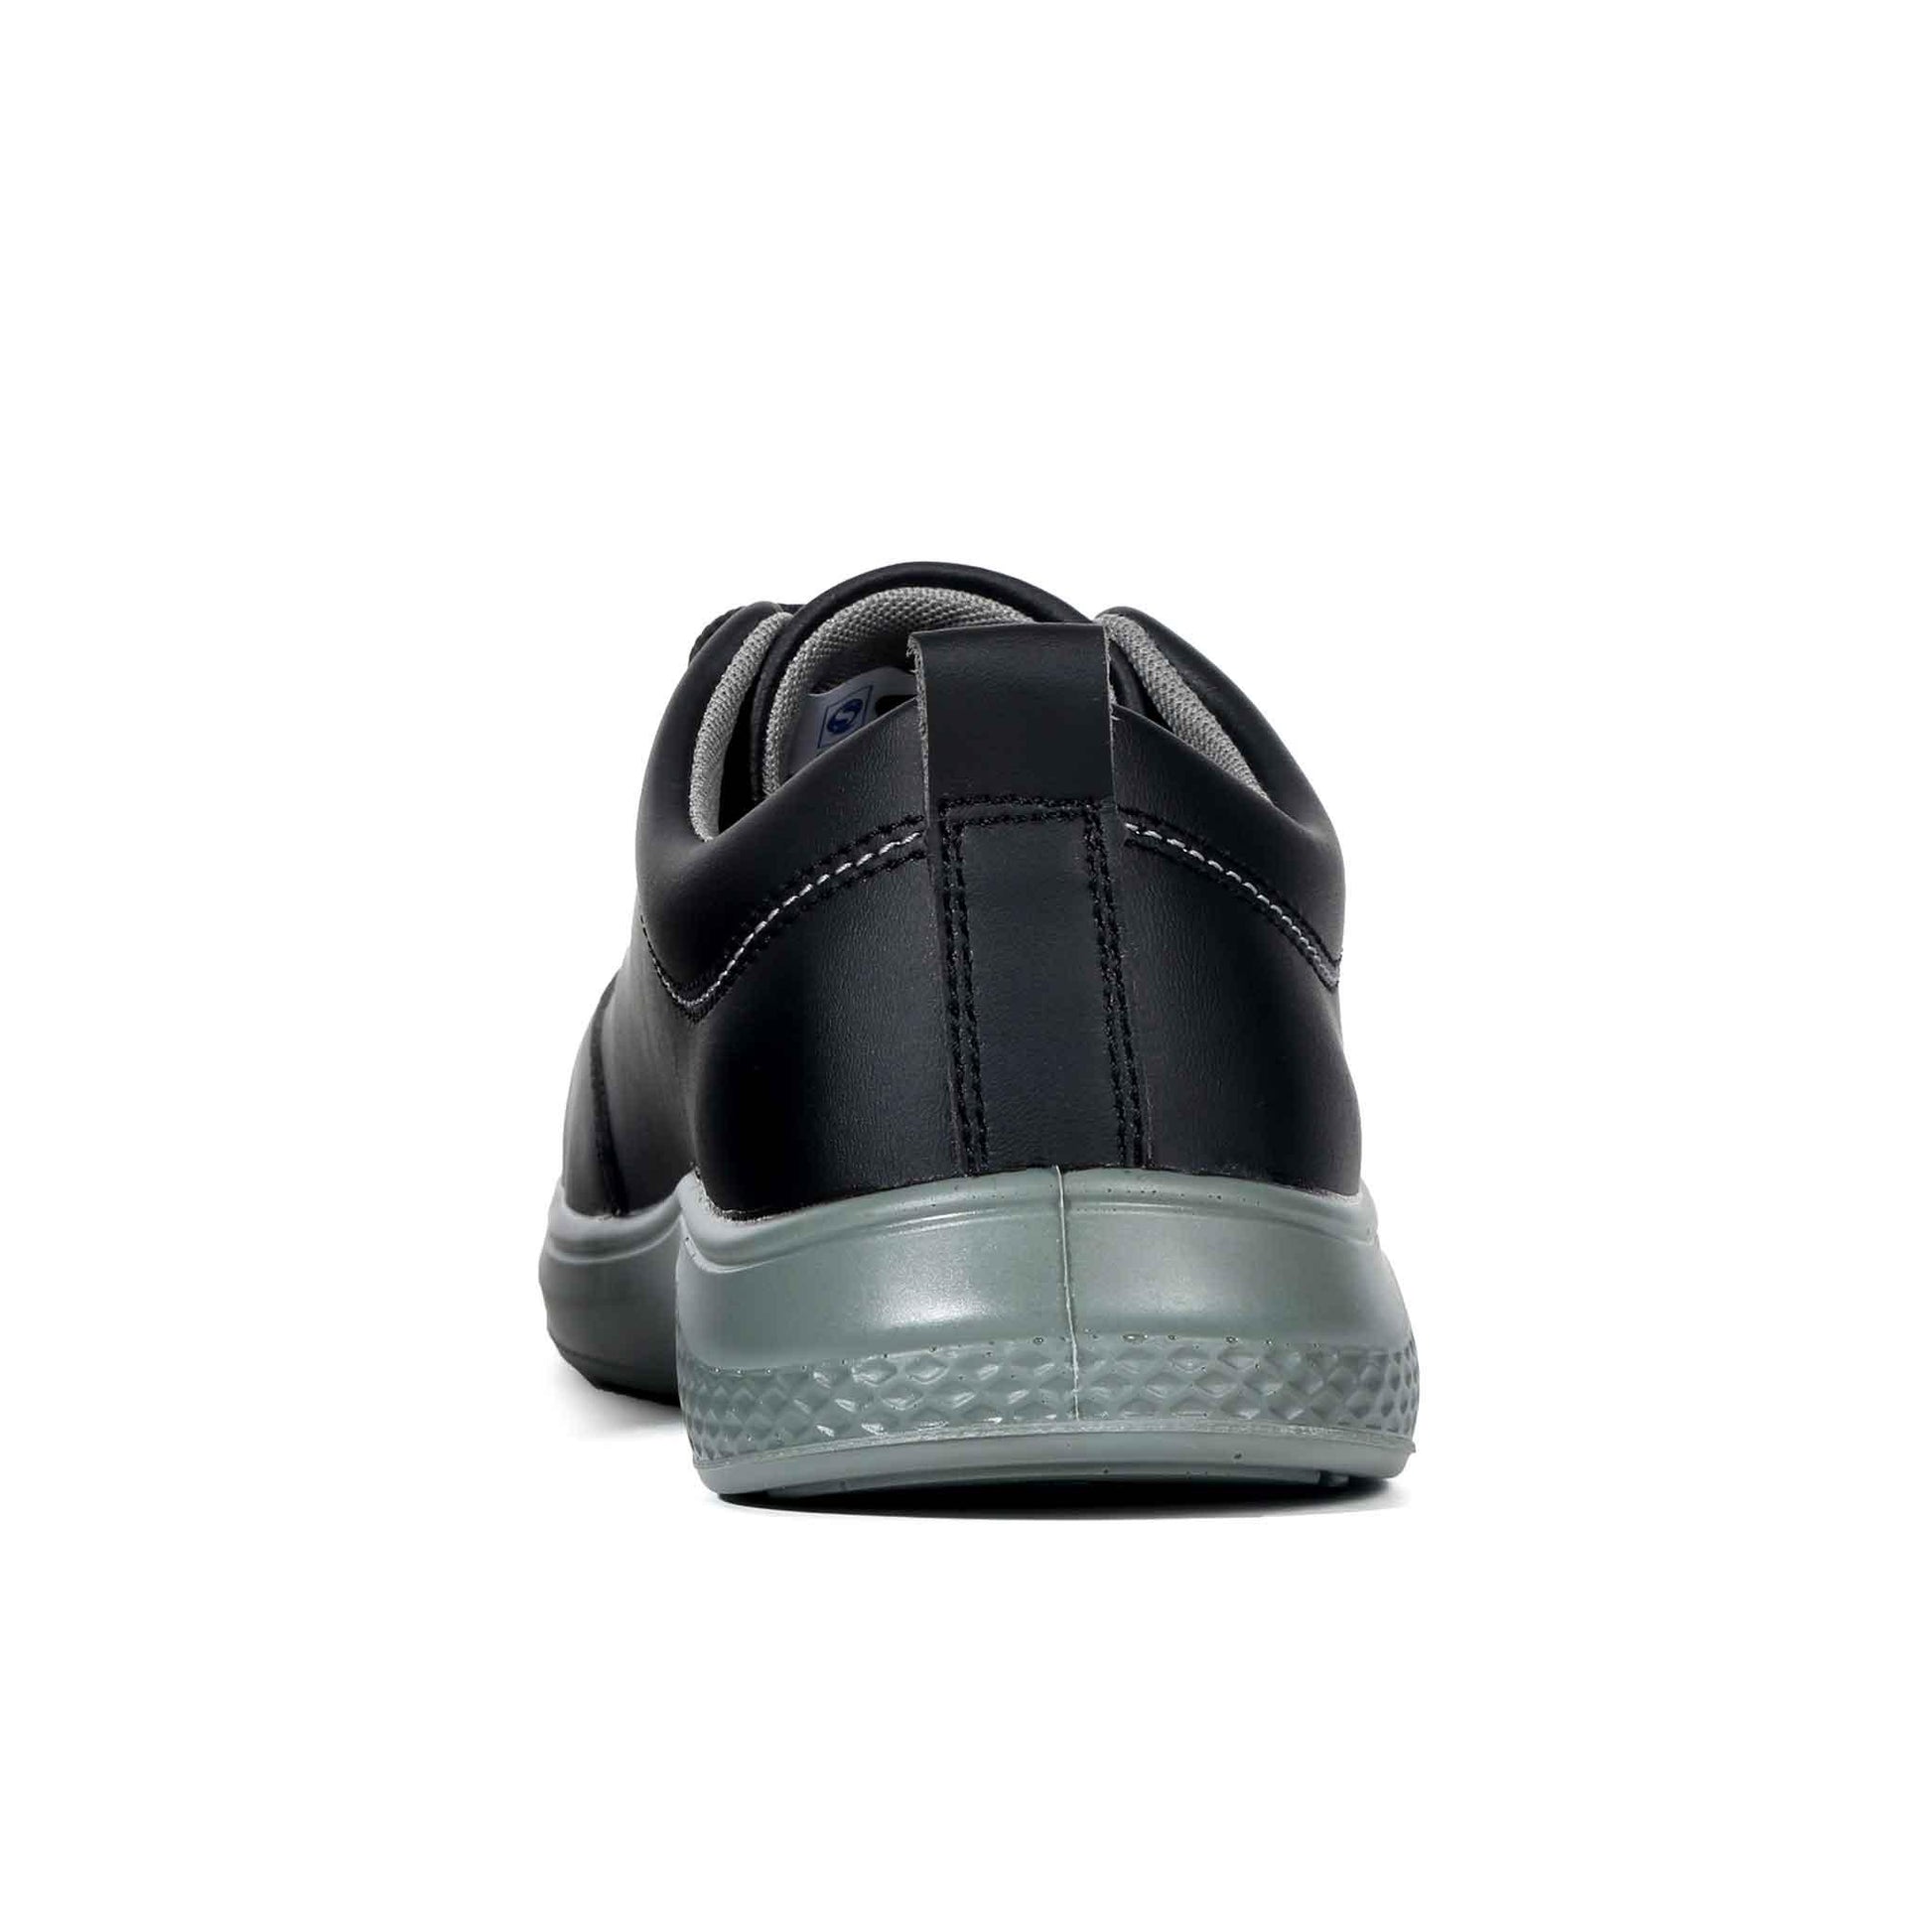 Men's Comp Toe ESD Work Shoes - Non Slip | Z017 - USINE PRO Footwear